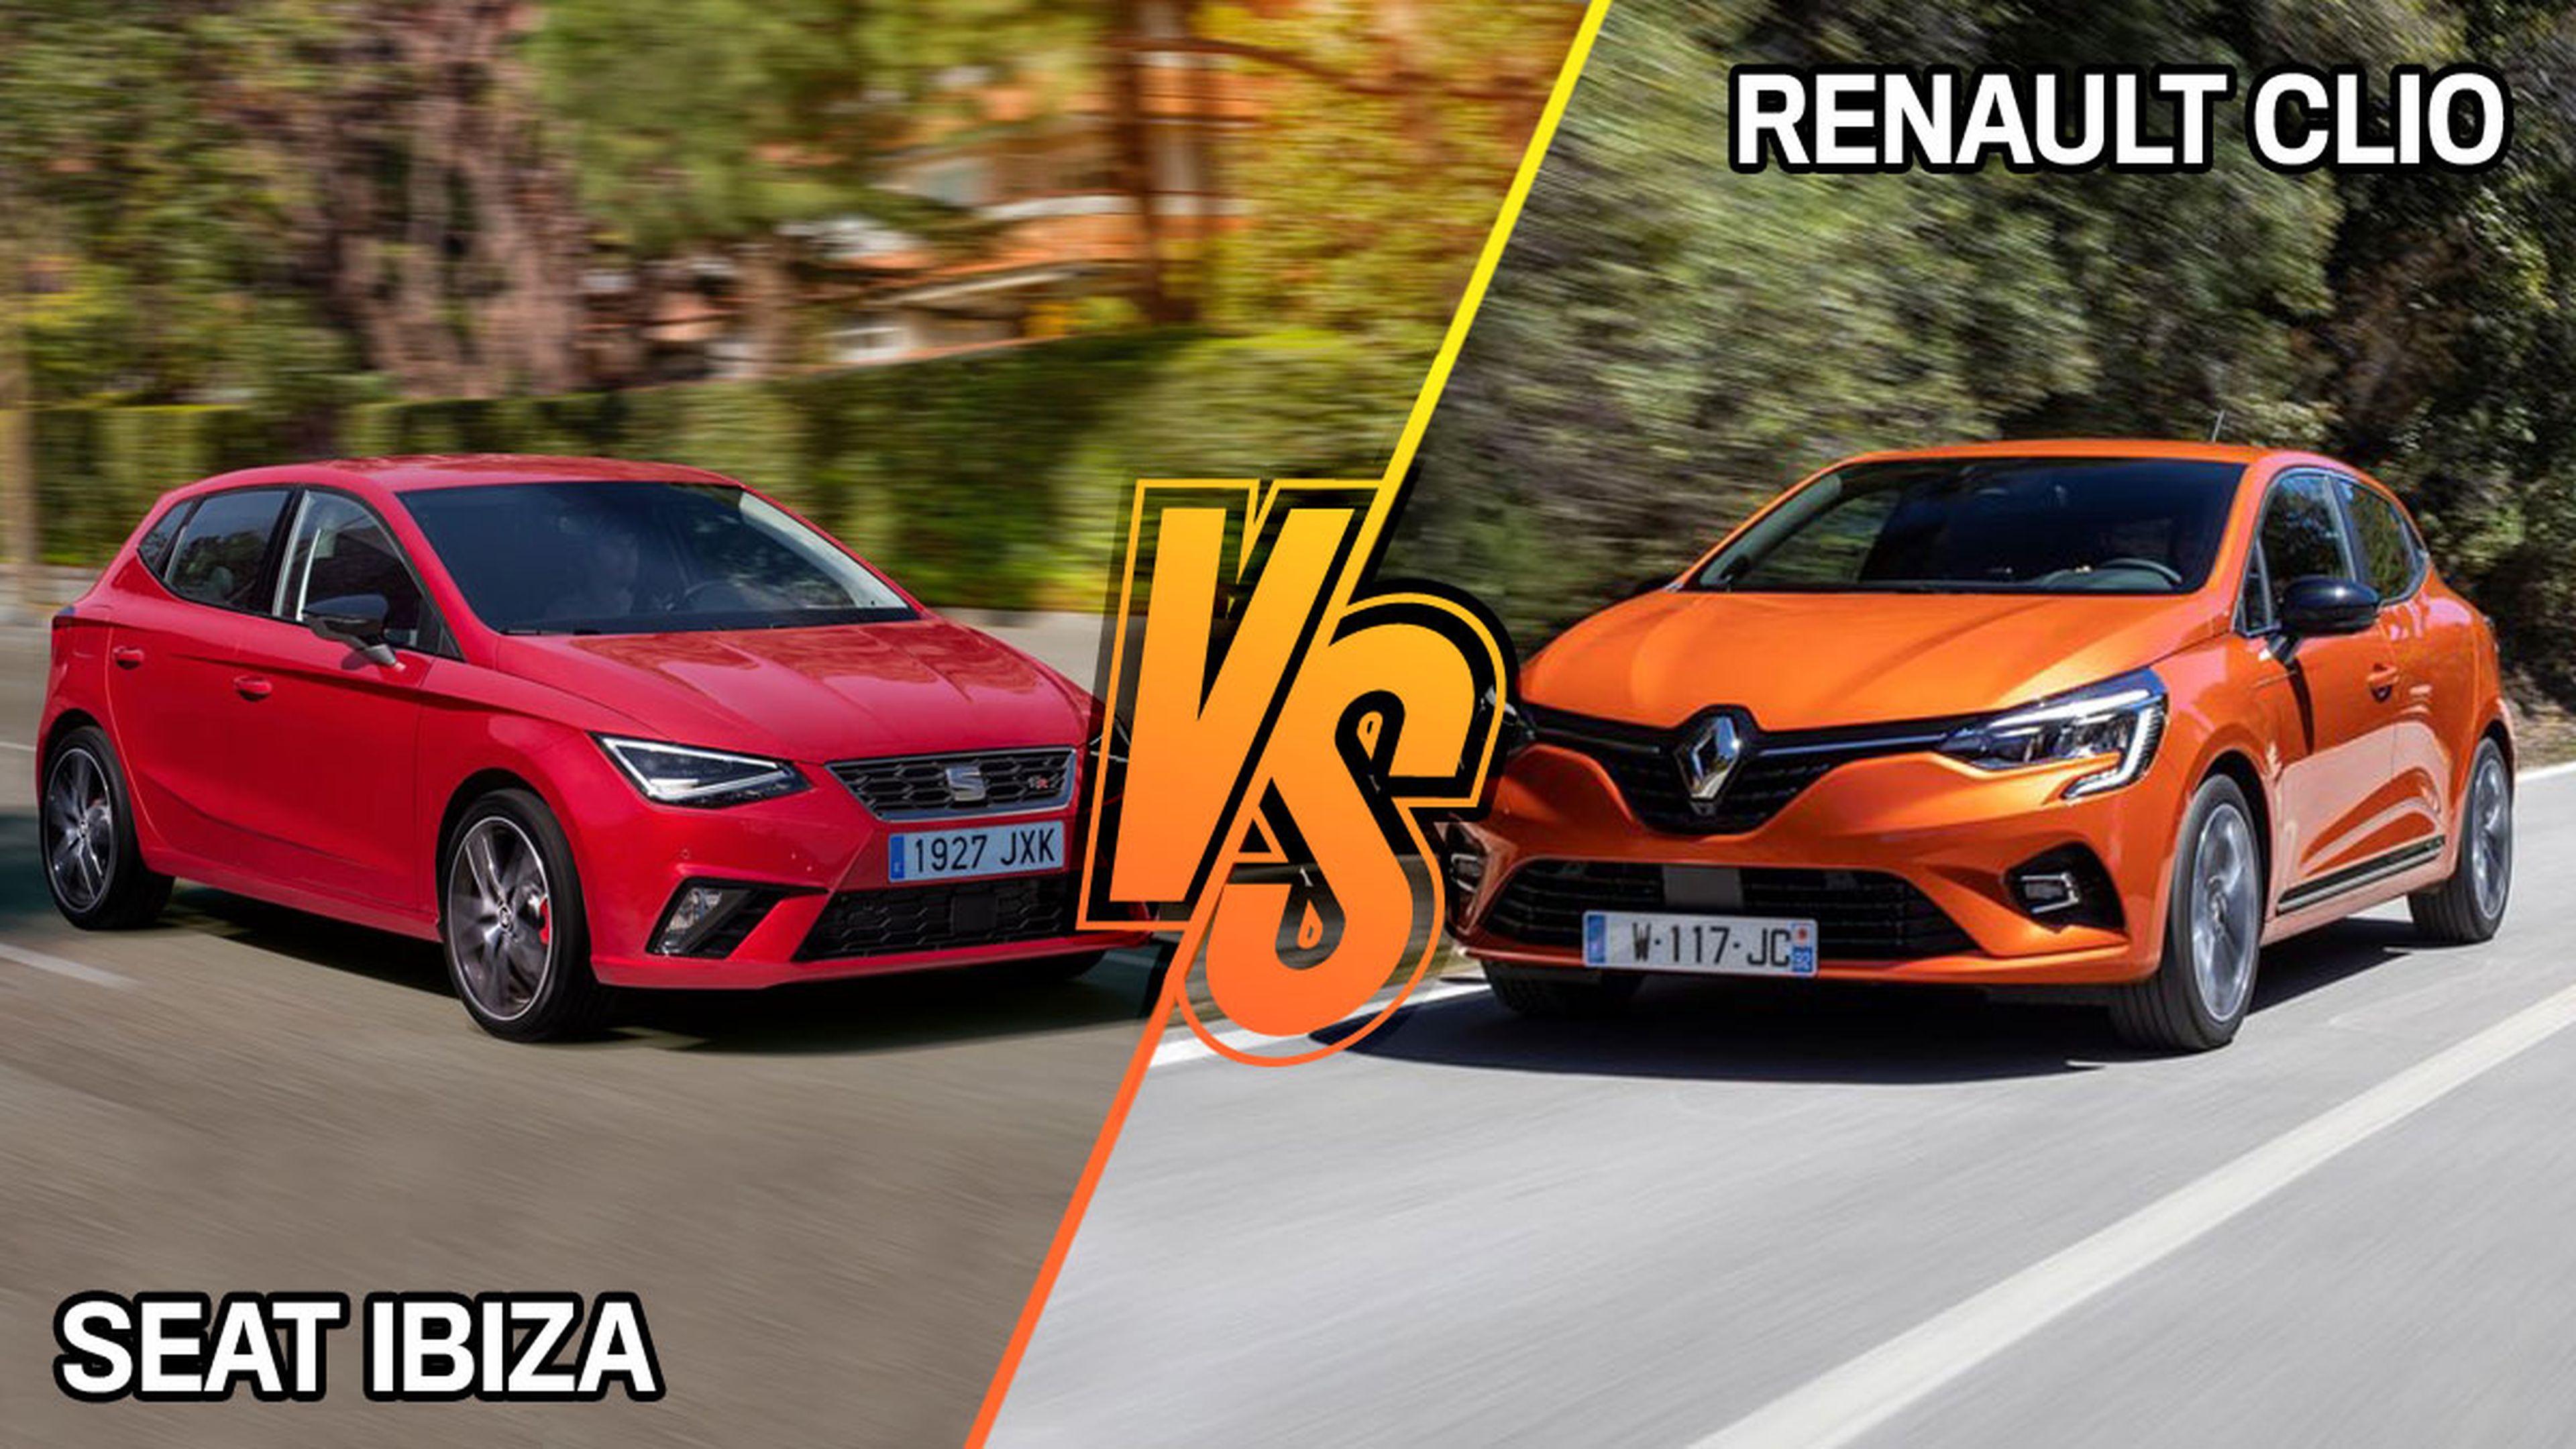 Renault Clio vs Seat Ibiza